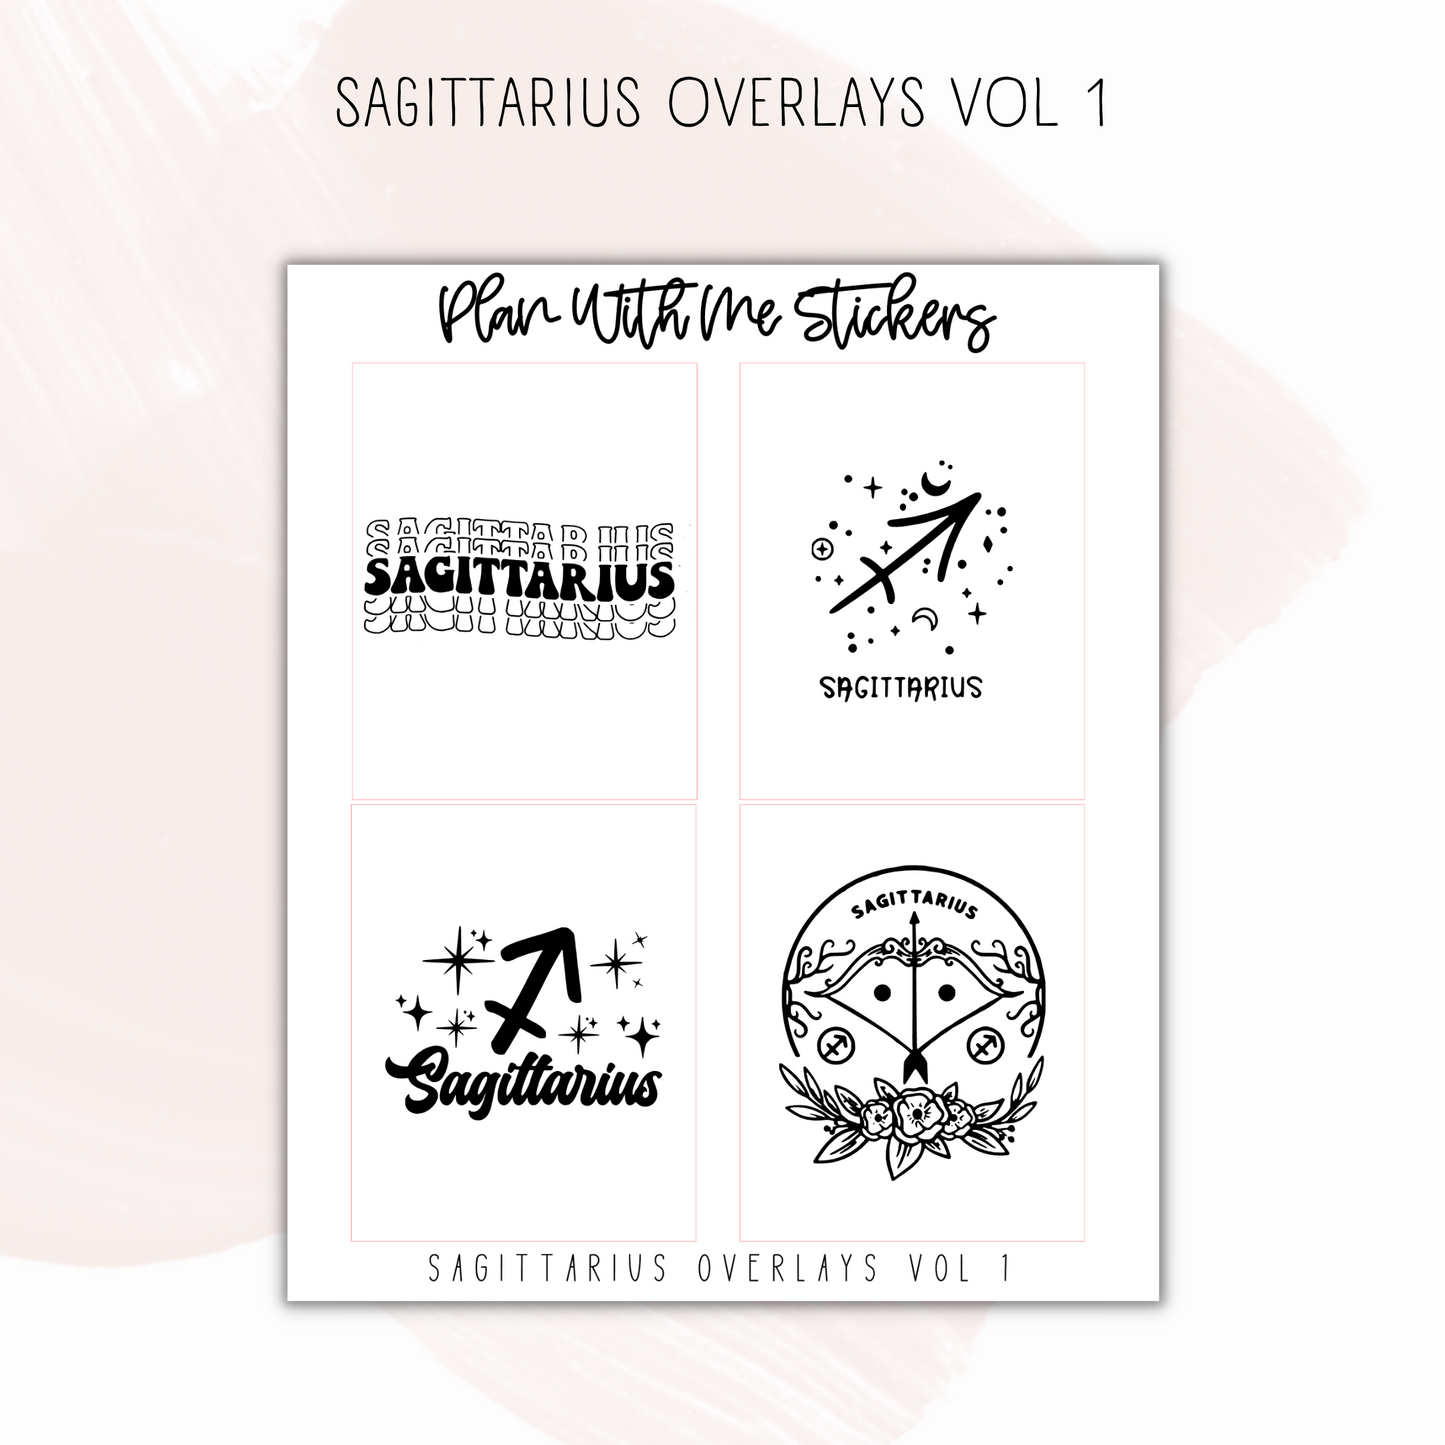 Sagittarius Overlays Vol 1